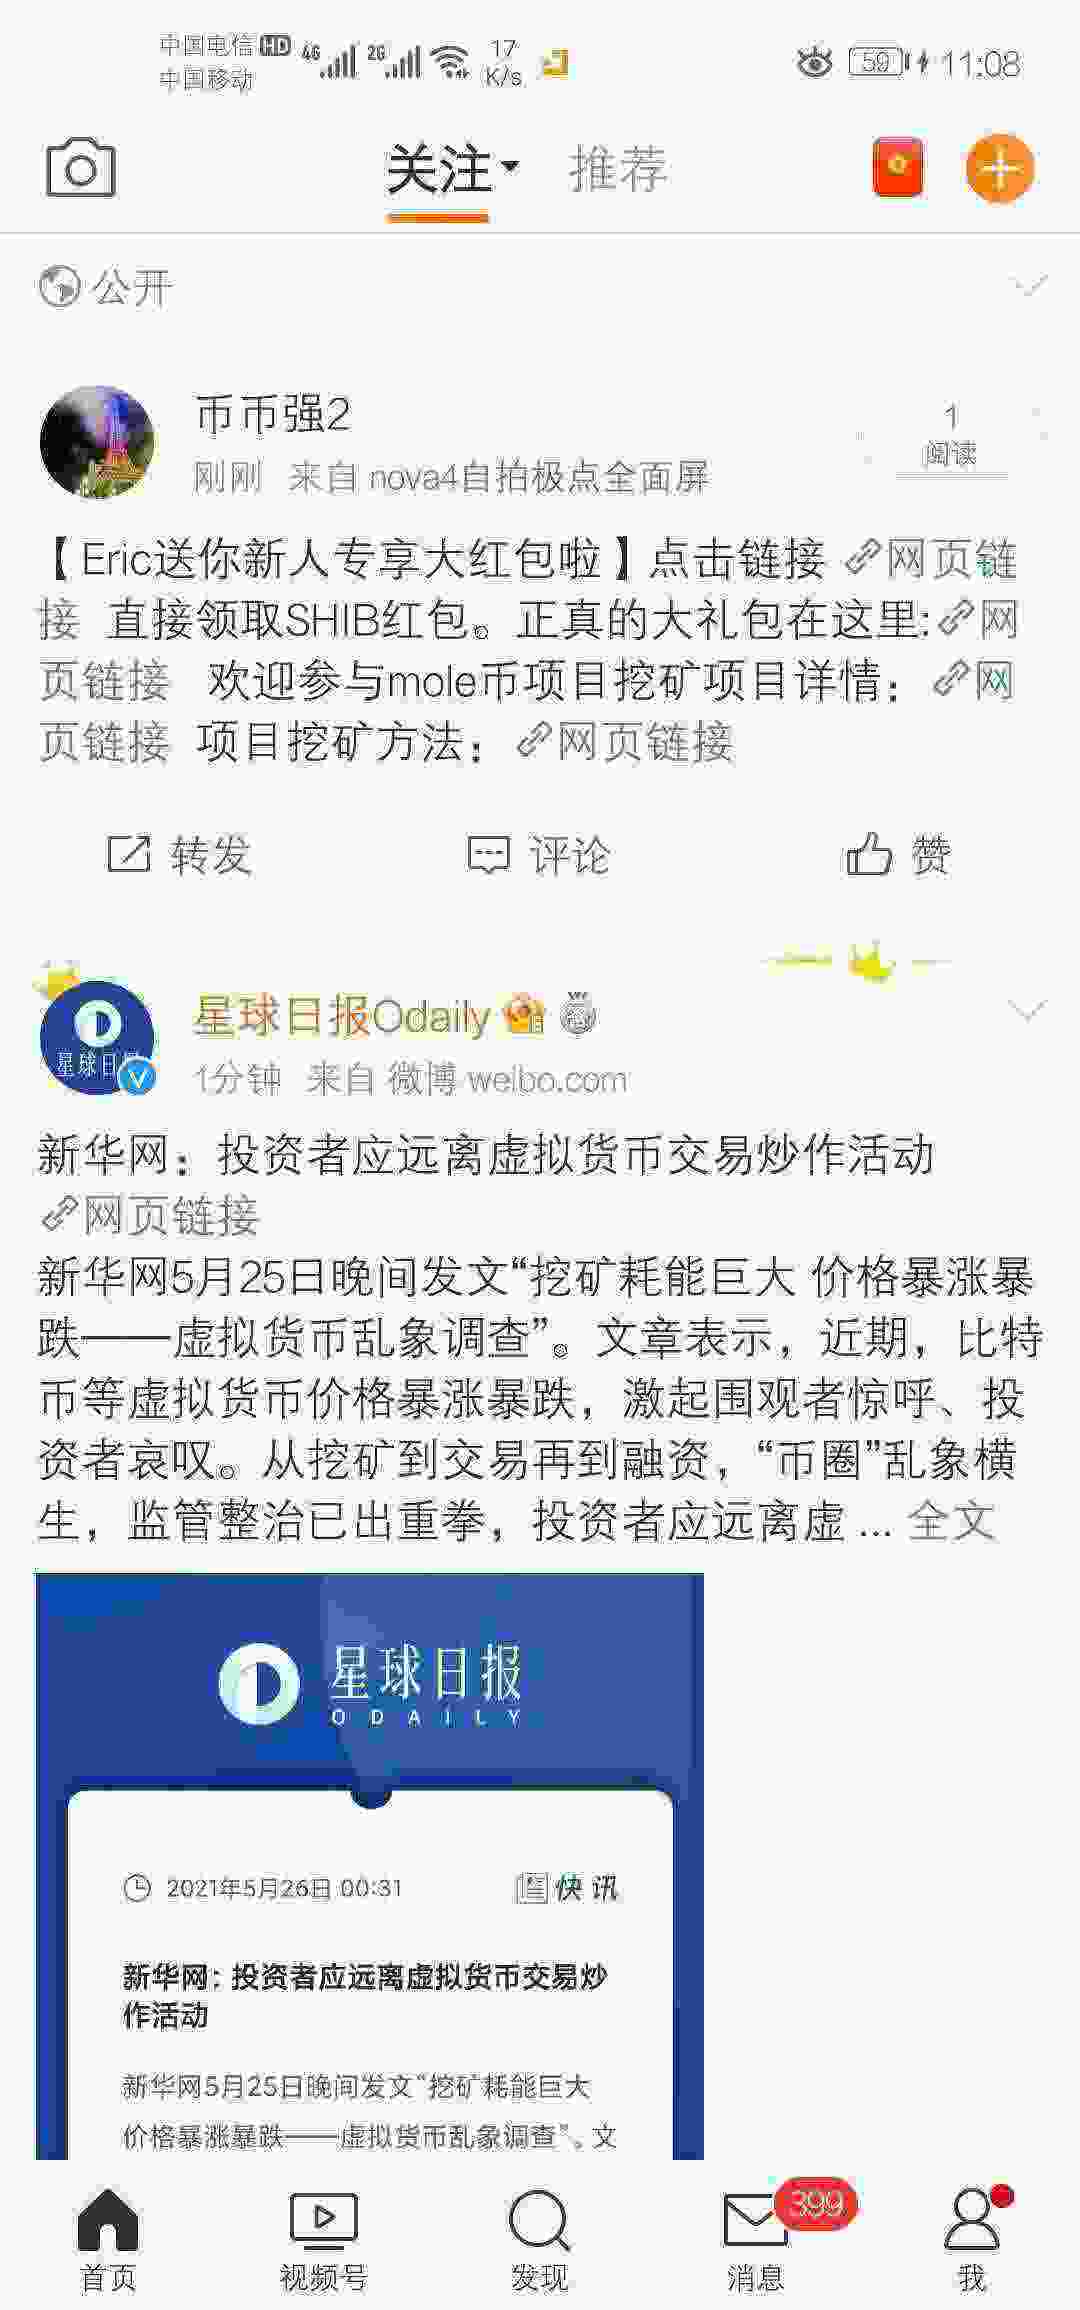 Screenshot_20210526_110838_com.sina.weibo.jpg